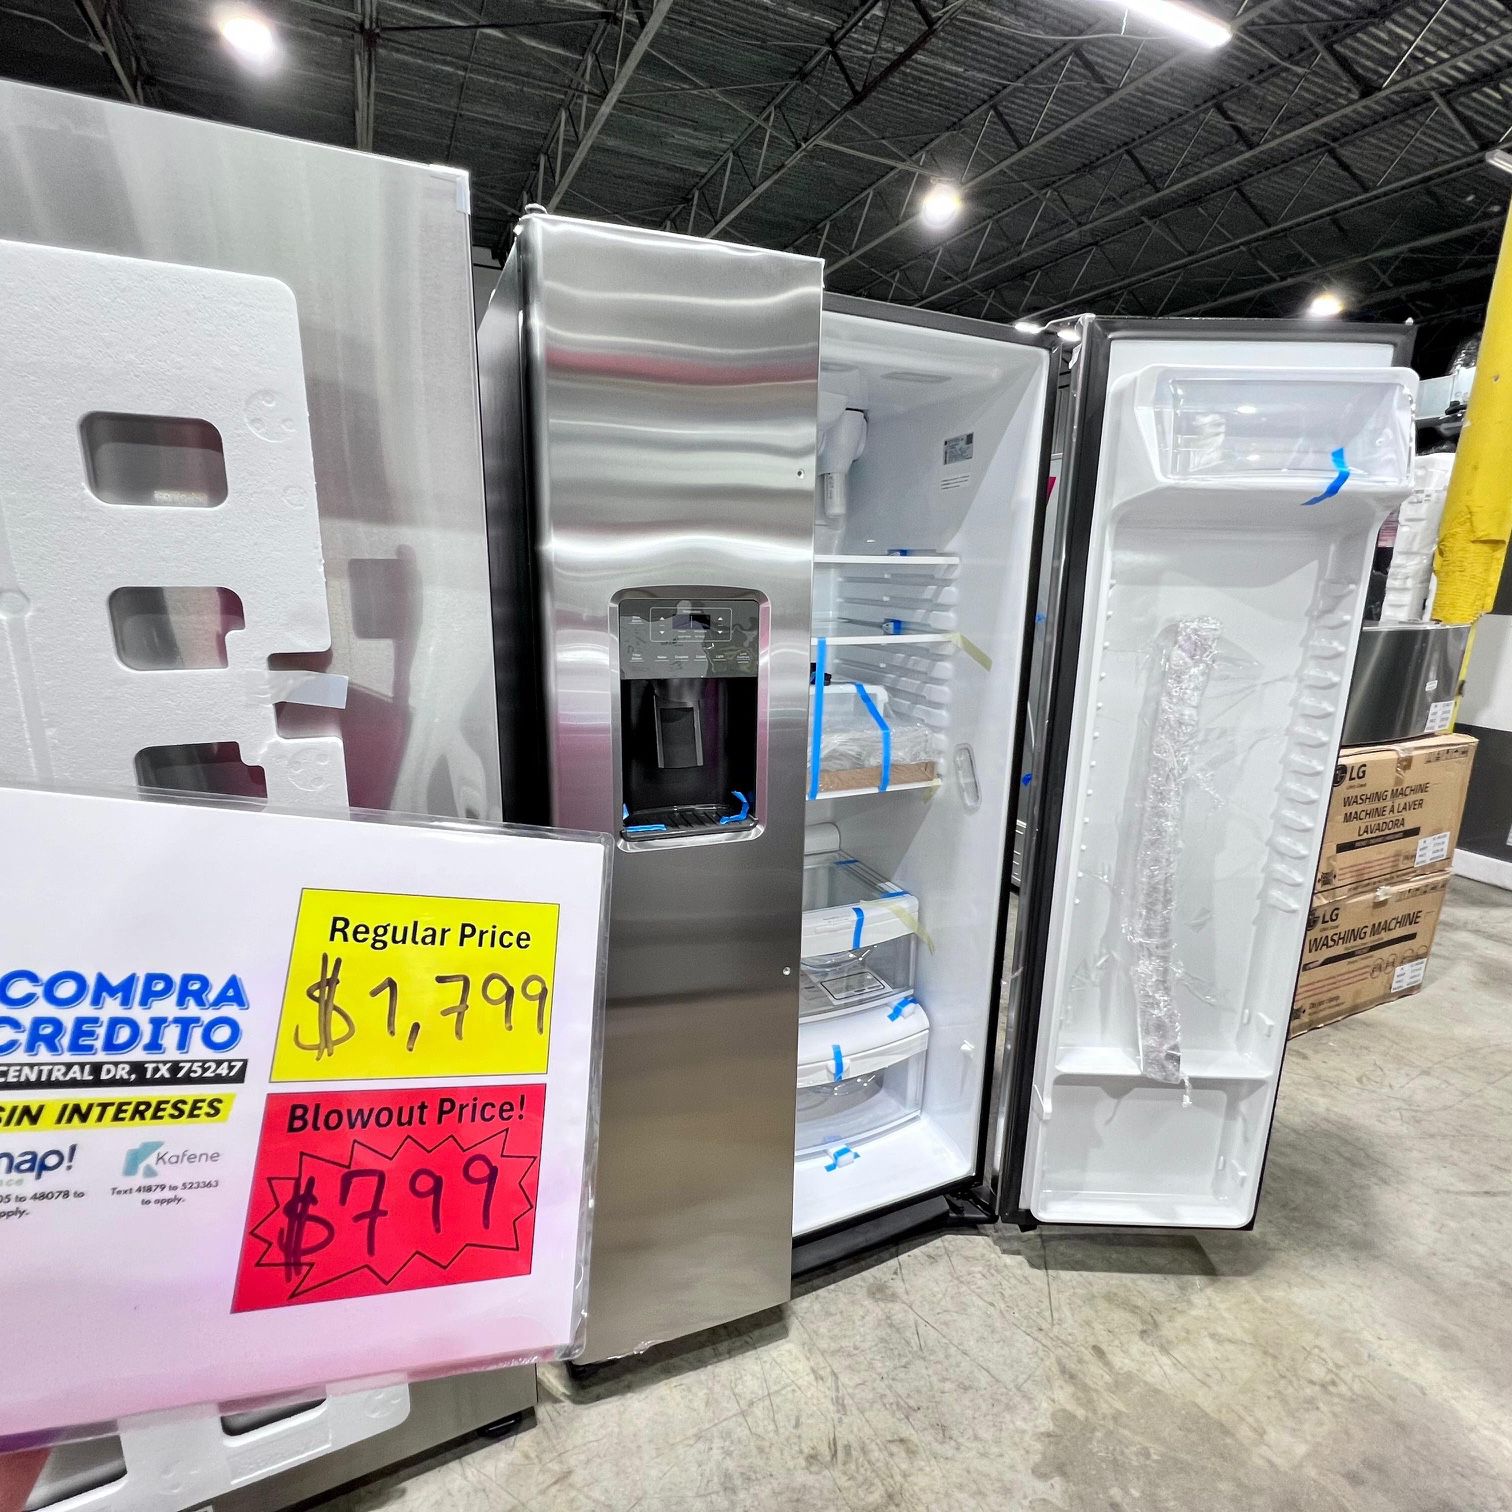 GE 25.3 Cu. Ft. Side-By-Side Refrigerator